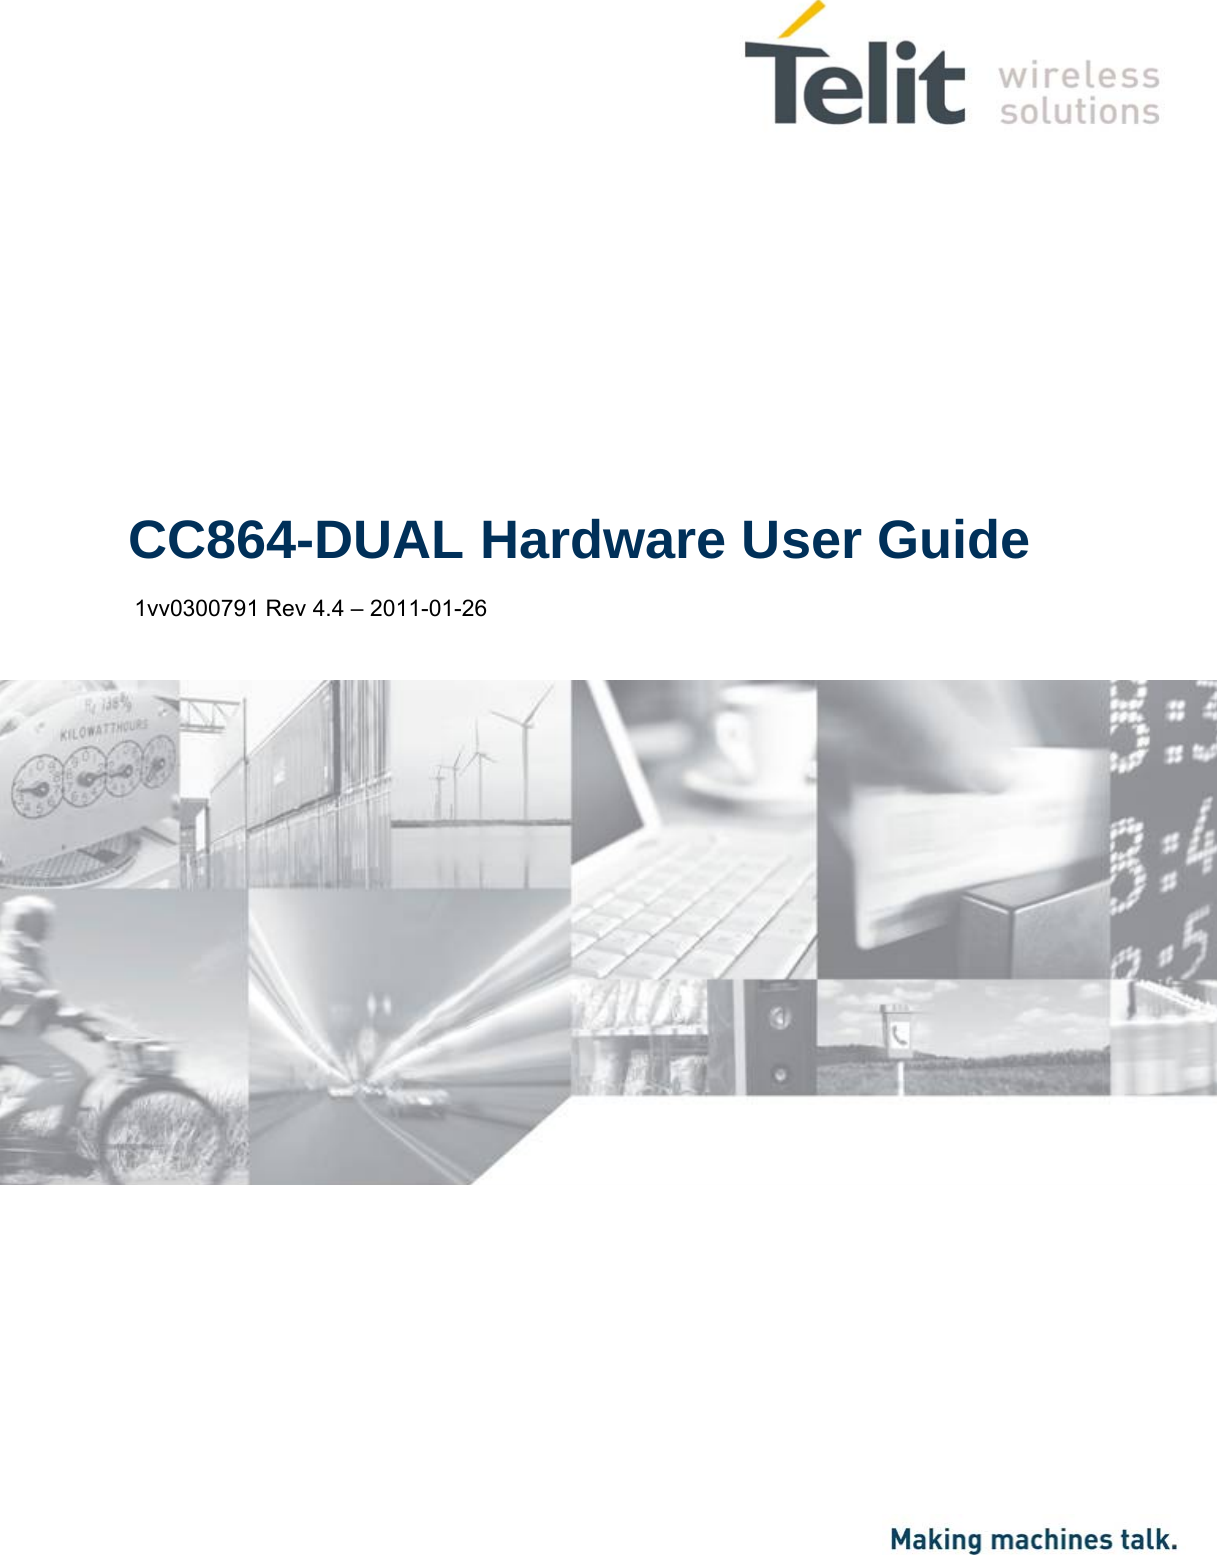                  CC864-DUAL Hardware User Guide  1vv0300791 Rev 4.4 – 2011-01-26       